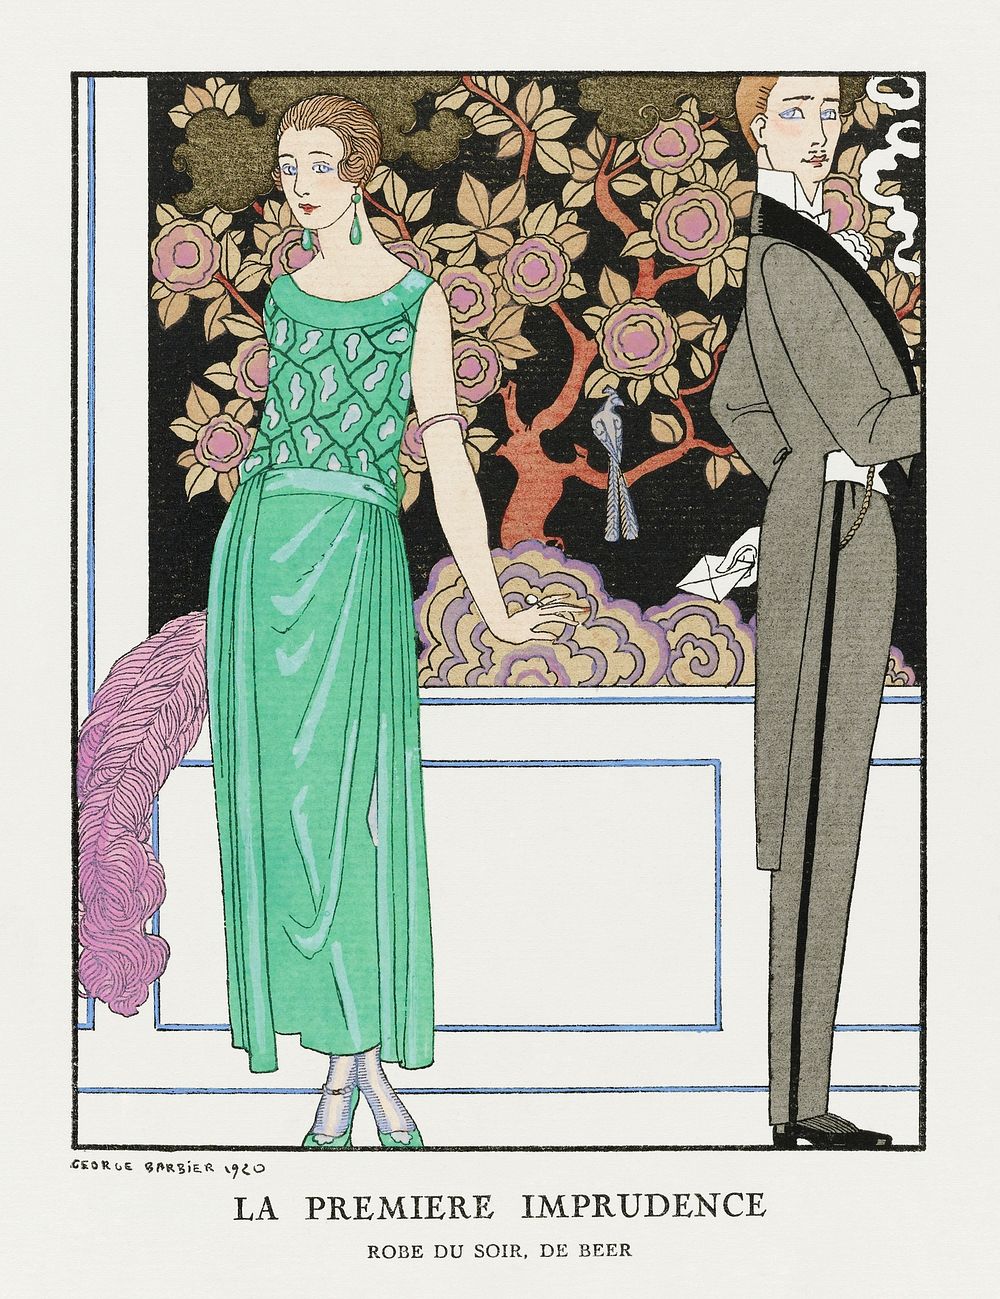 La premiere imprudence: Robe du soir, de Beer (1921) fashion illustration in high resolution by George Barbier. Original…